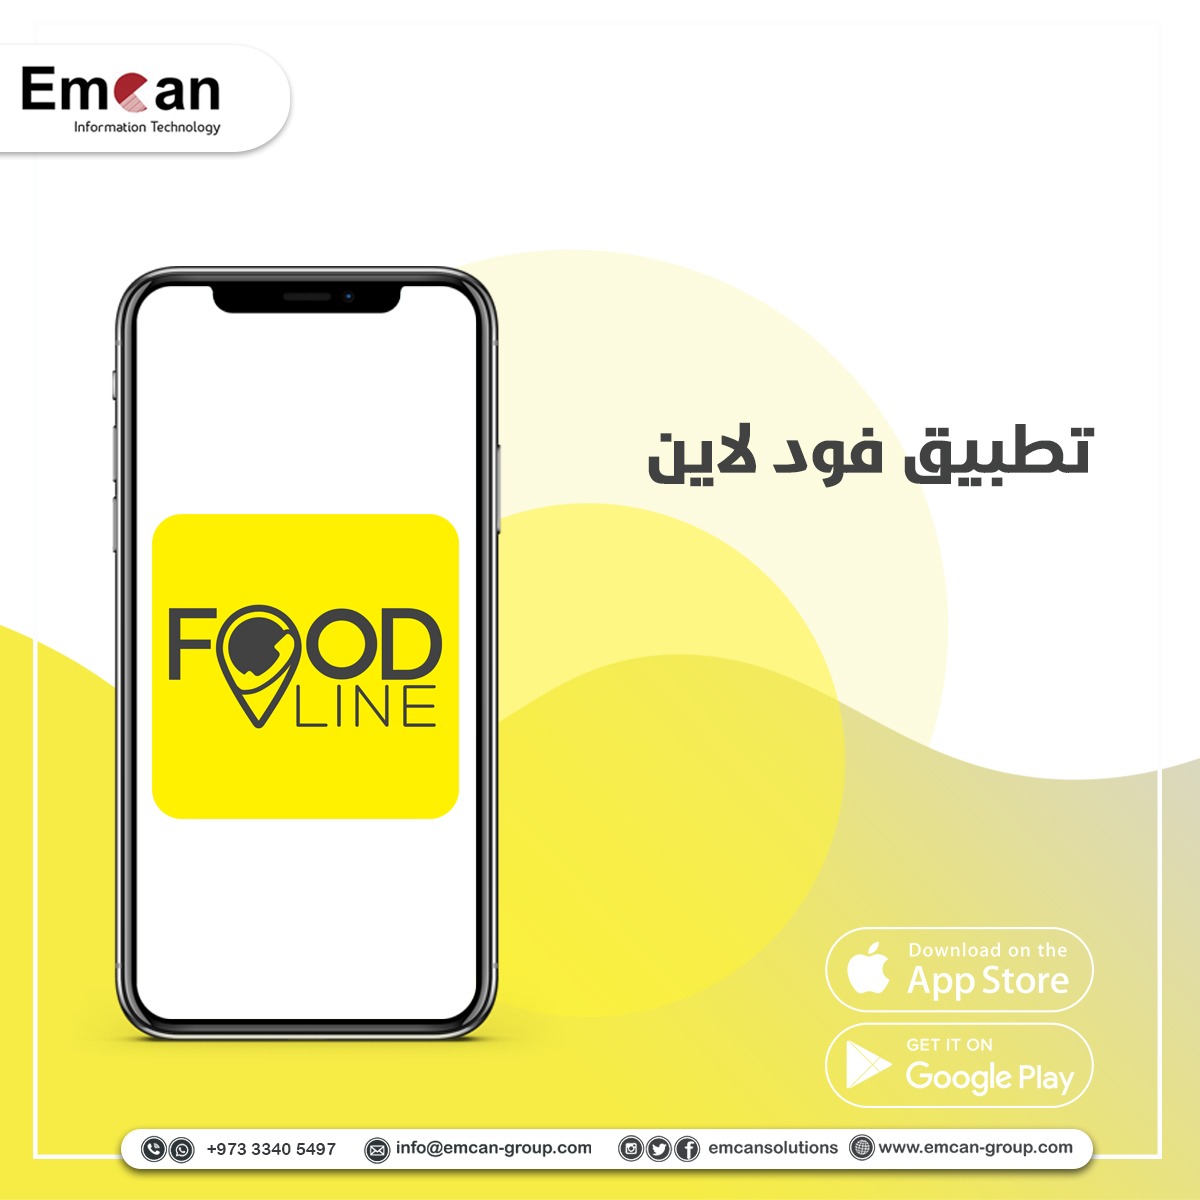 Food Line Restaurant App